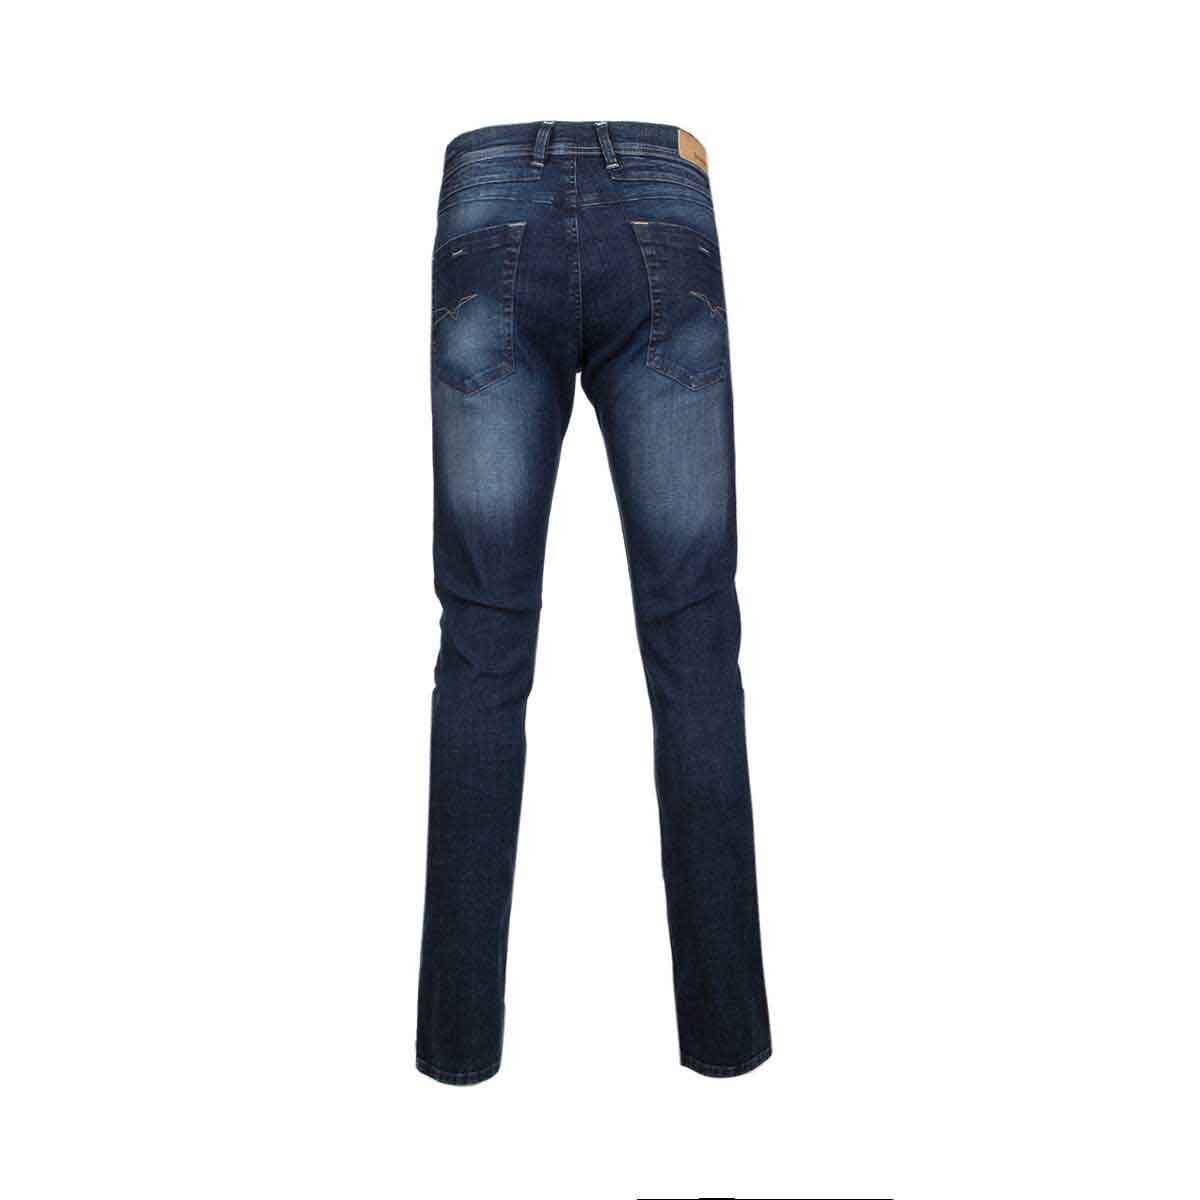 Jeans Deslavados Fukka